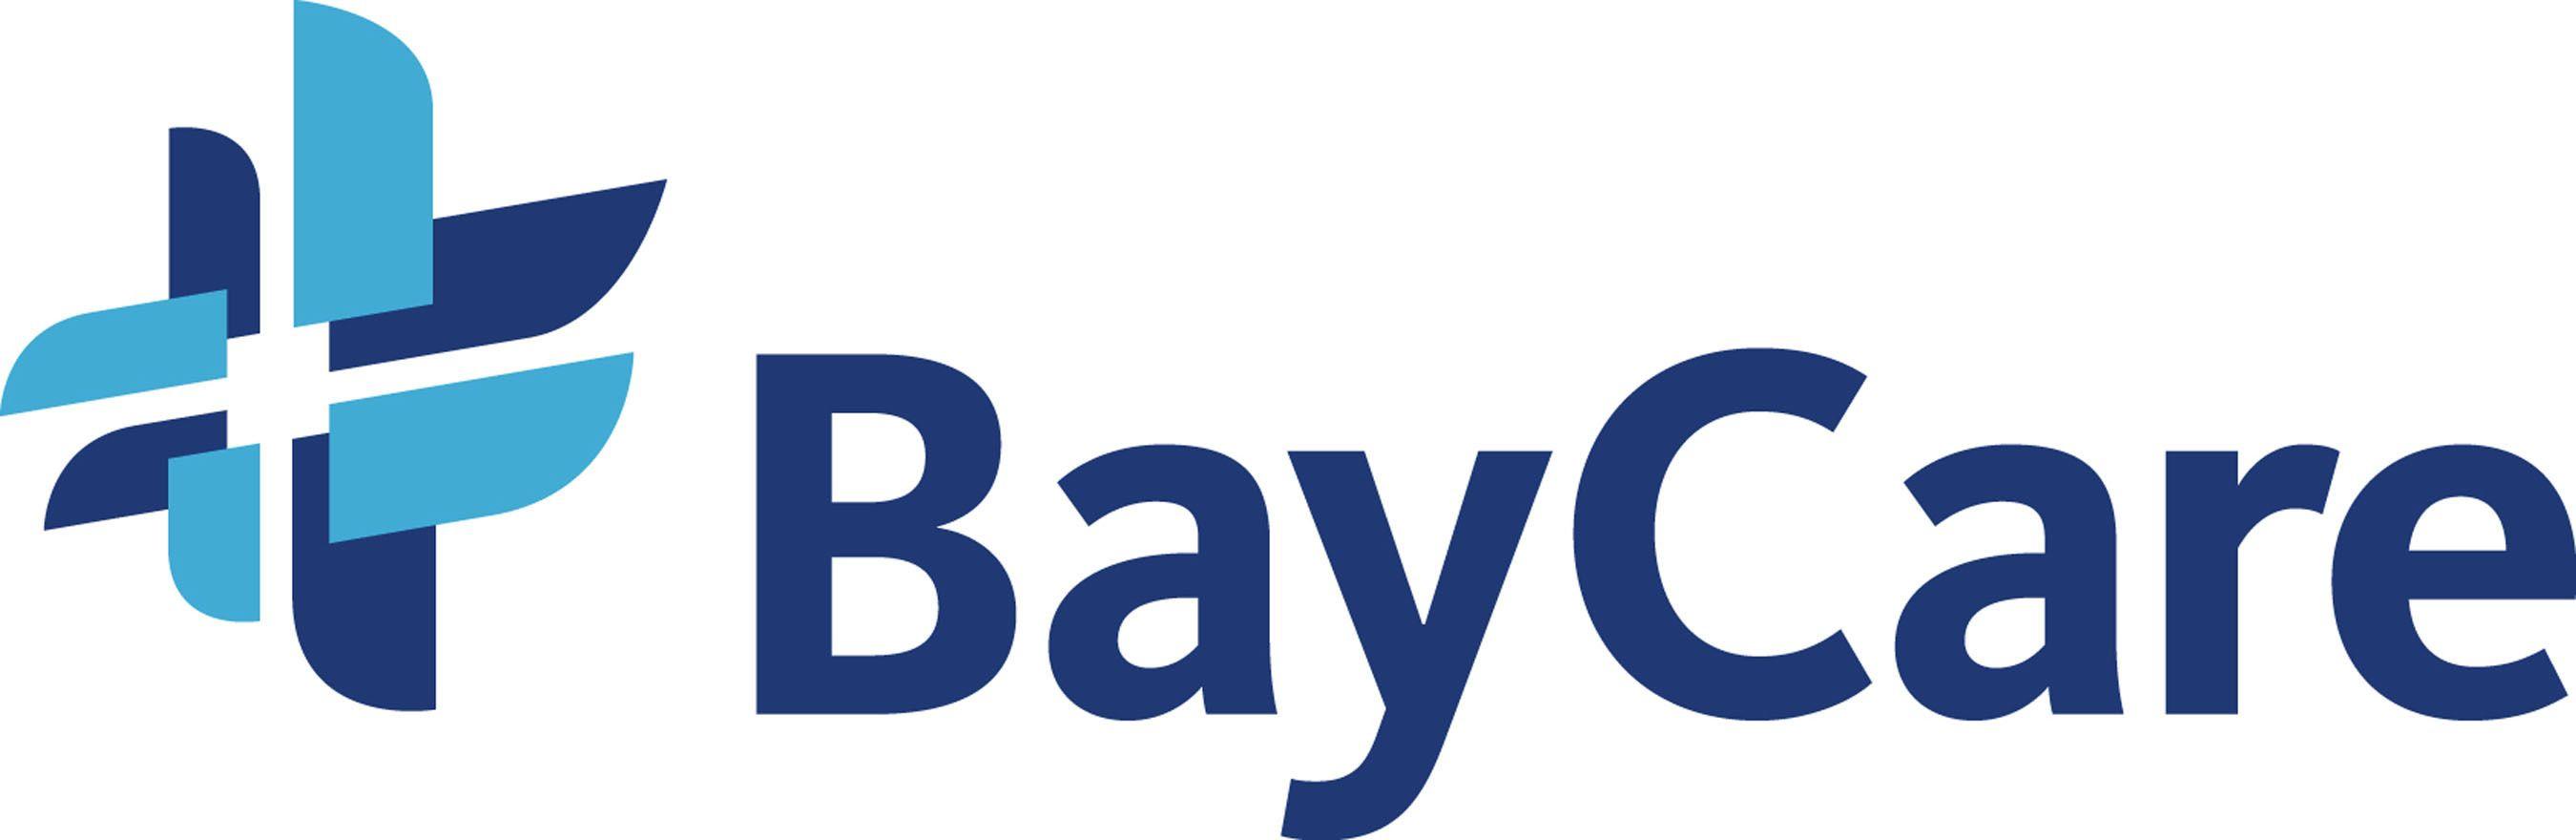 BayCare Logo - BayCare Named One of America's Best Employers